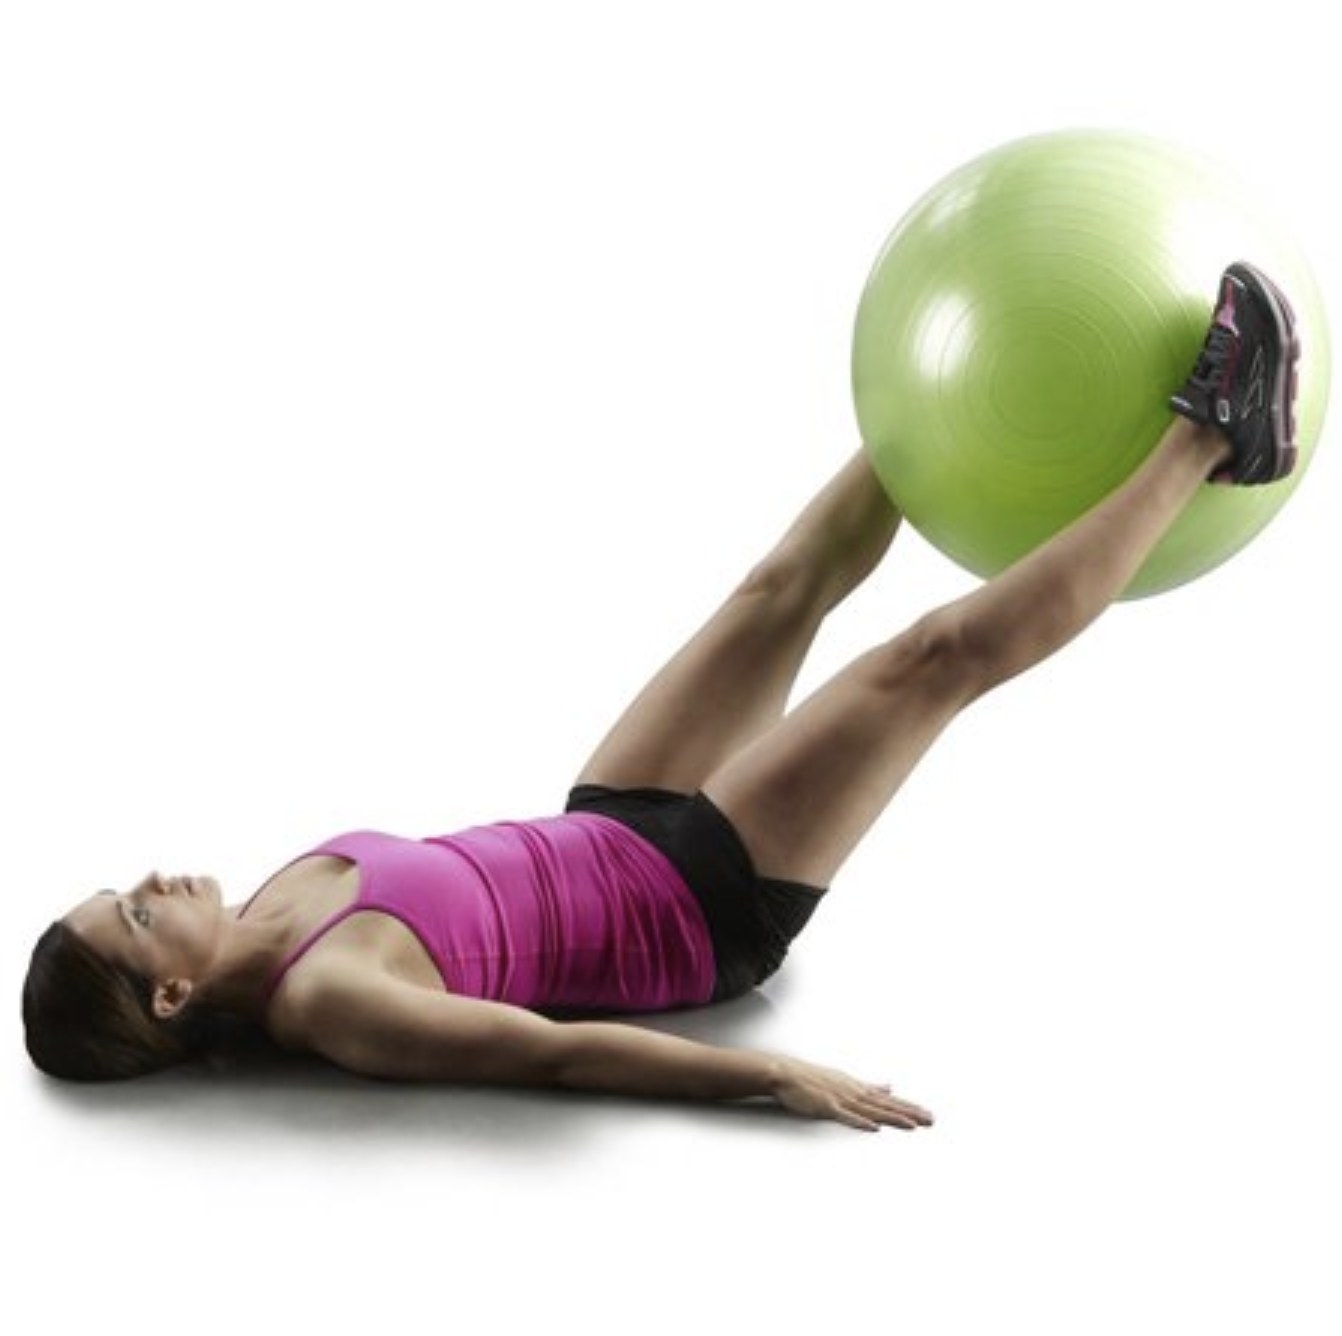 Model doing leg raises with the green medicine ball